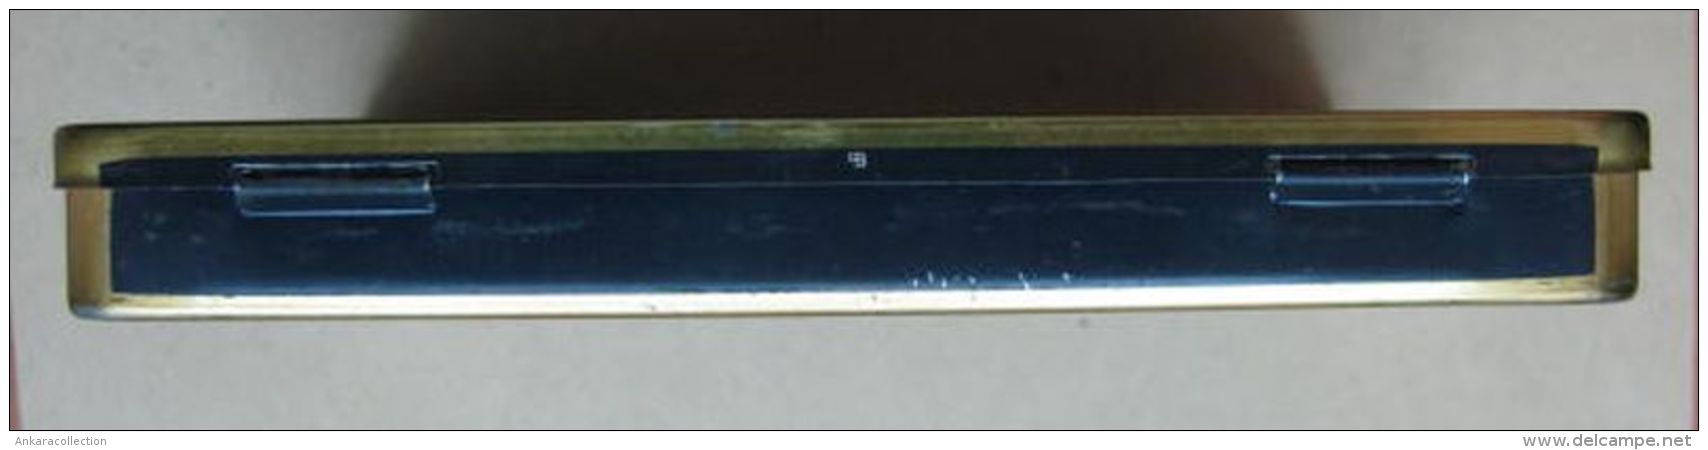 AC - MERCEDES BATSCHARI REIN ORIENT #2   50 CIGARETTES EMPTY TIN BOX - Schnupftabakdosen (leer)